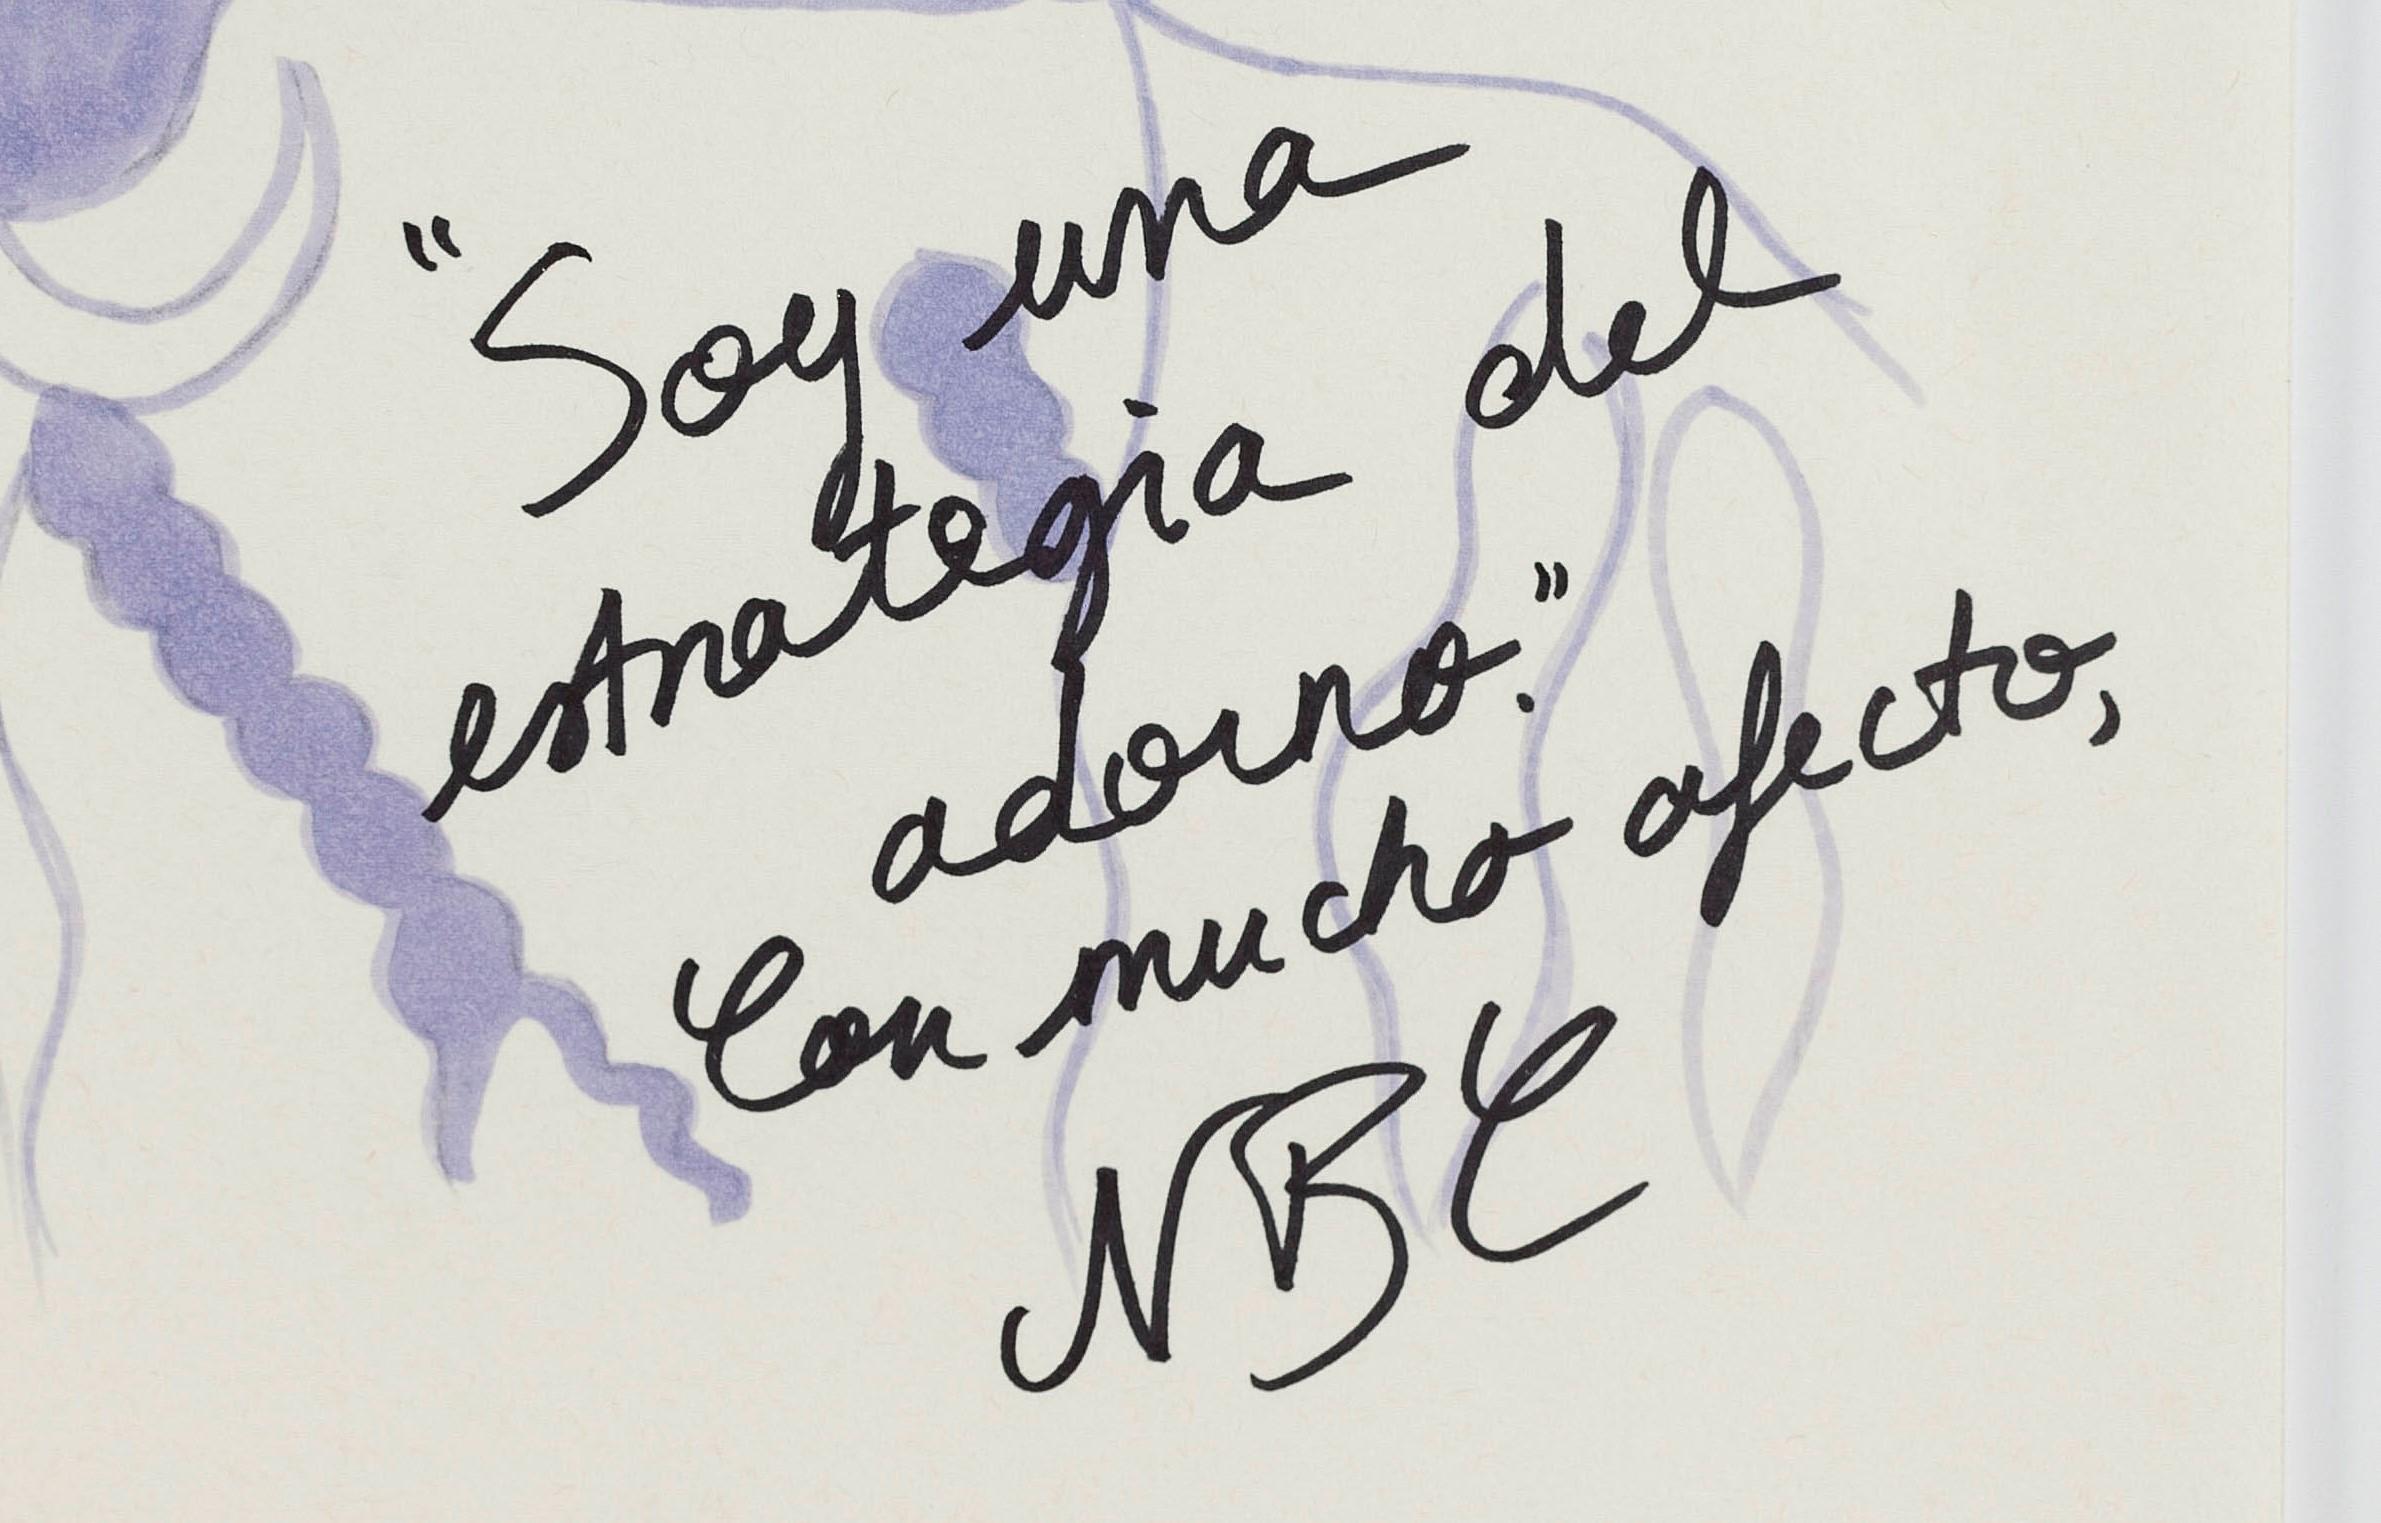 Pola Negri III. Dessins de la série Dis-enchanted. - Art de Paloma Castello